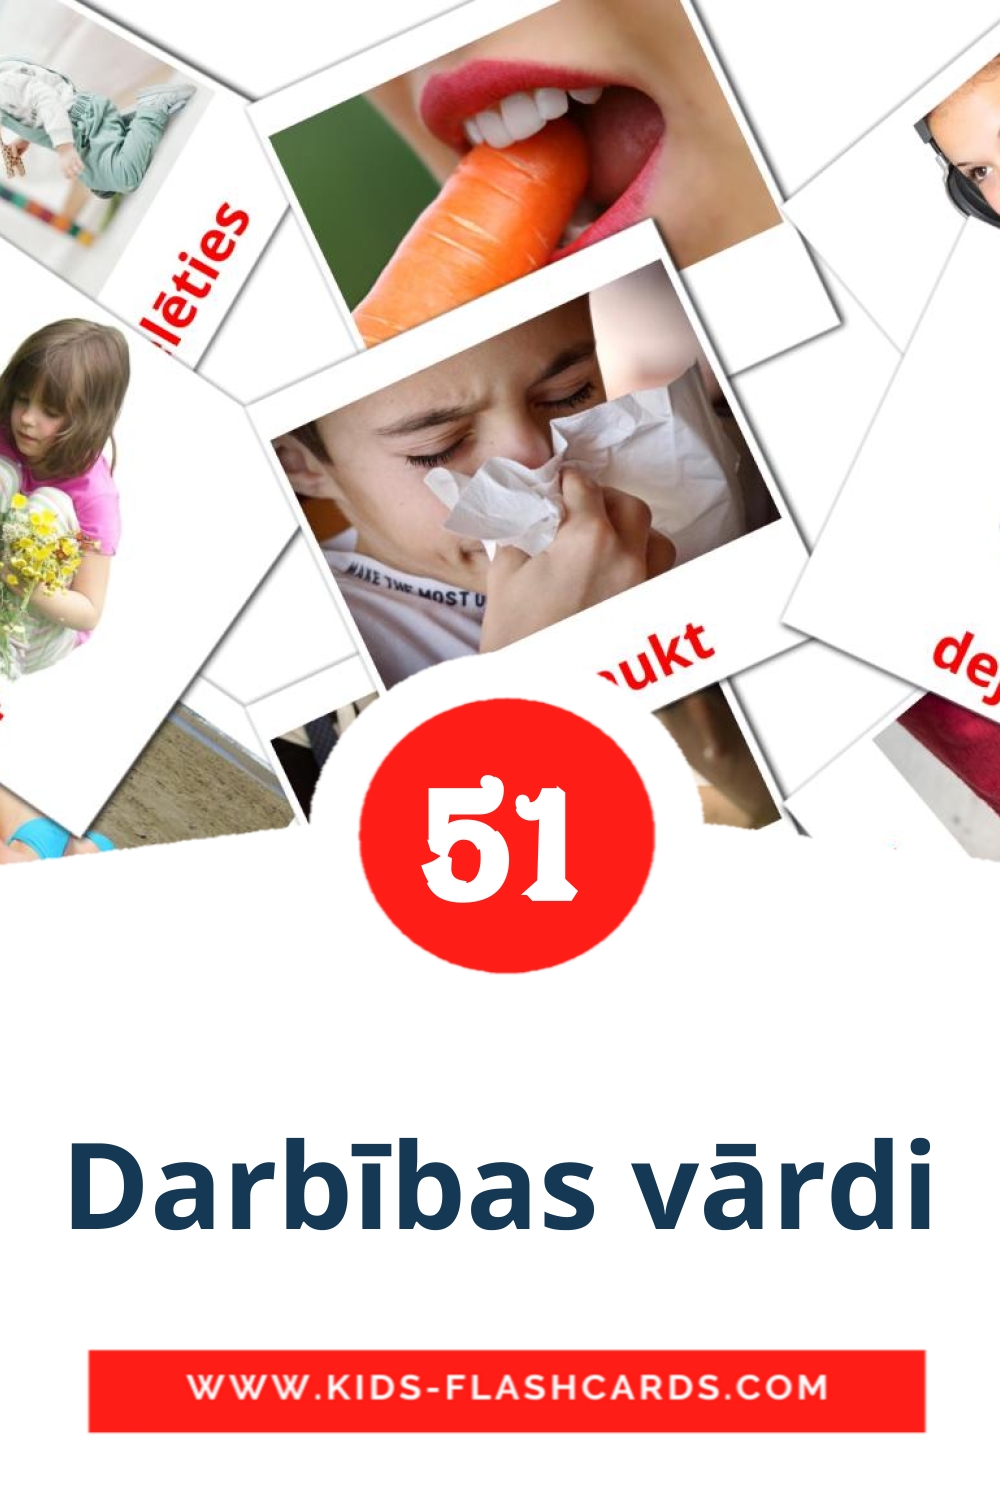 51 carte illustrate di Darbības vārdi per la scuola materna in lettone